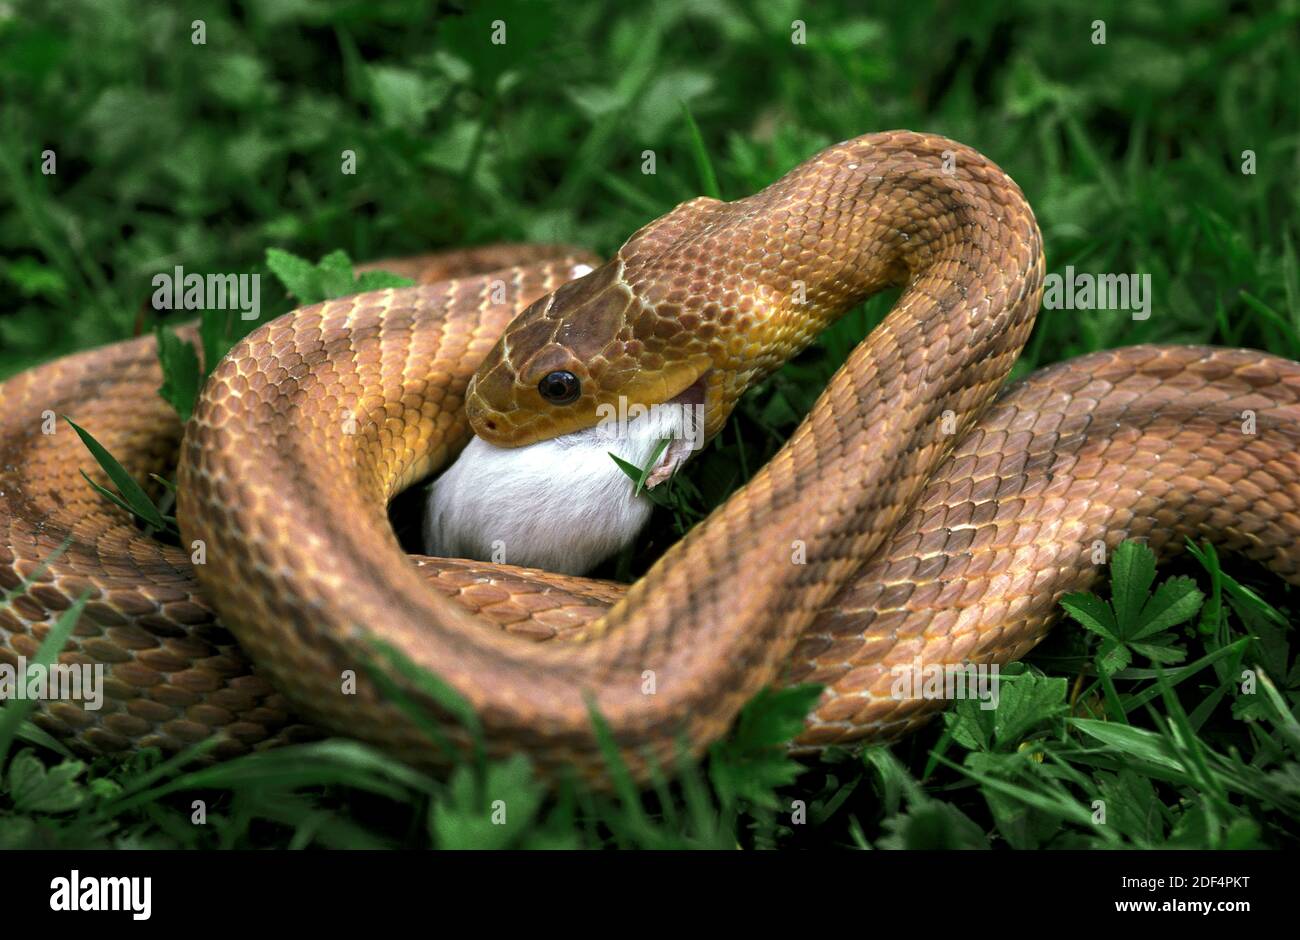 Four-Lined Snake, elaphe quatuorlineata, Adult eating White Mouse Stock Photo